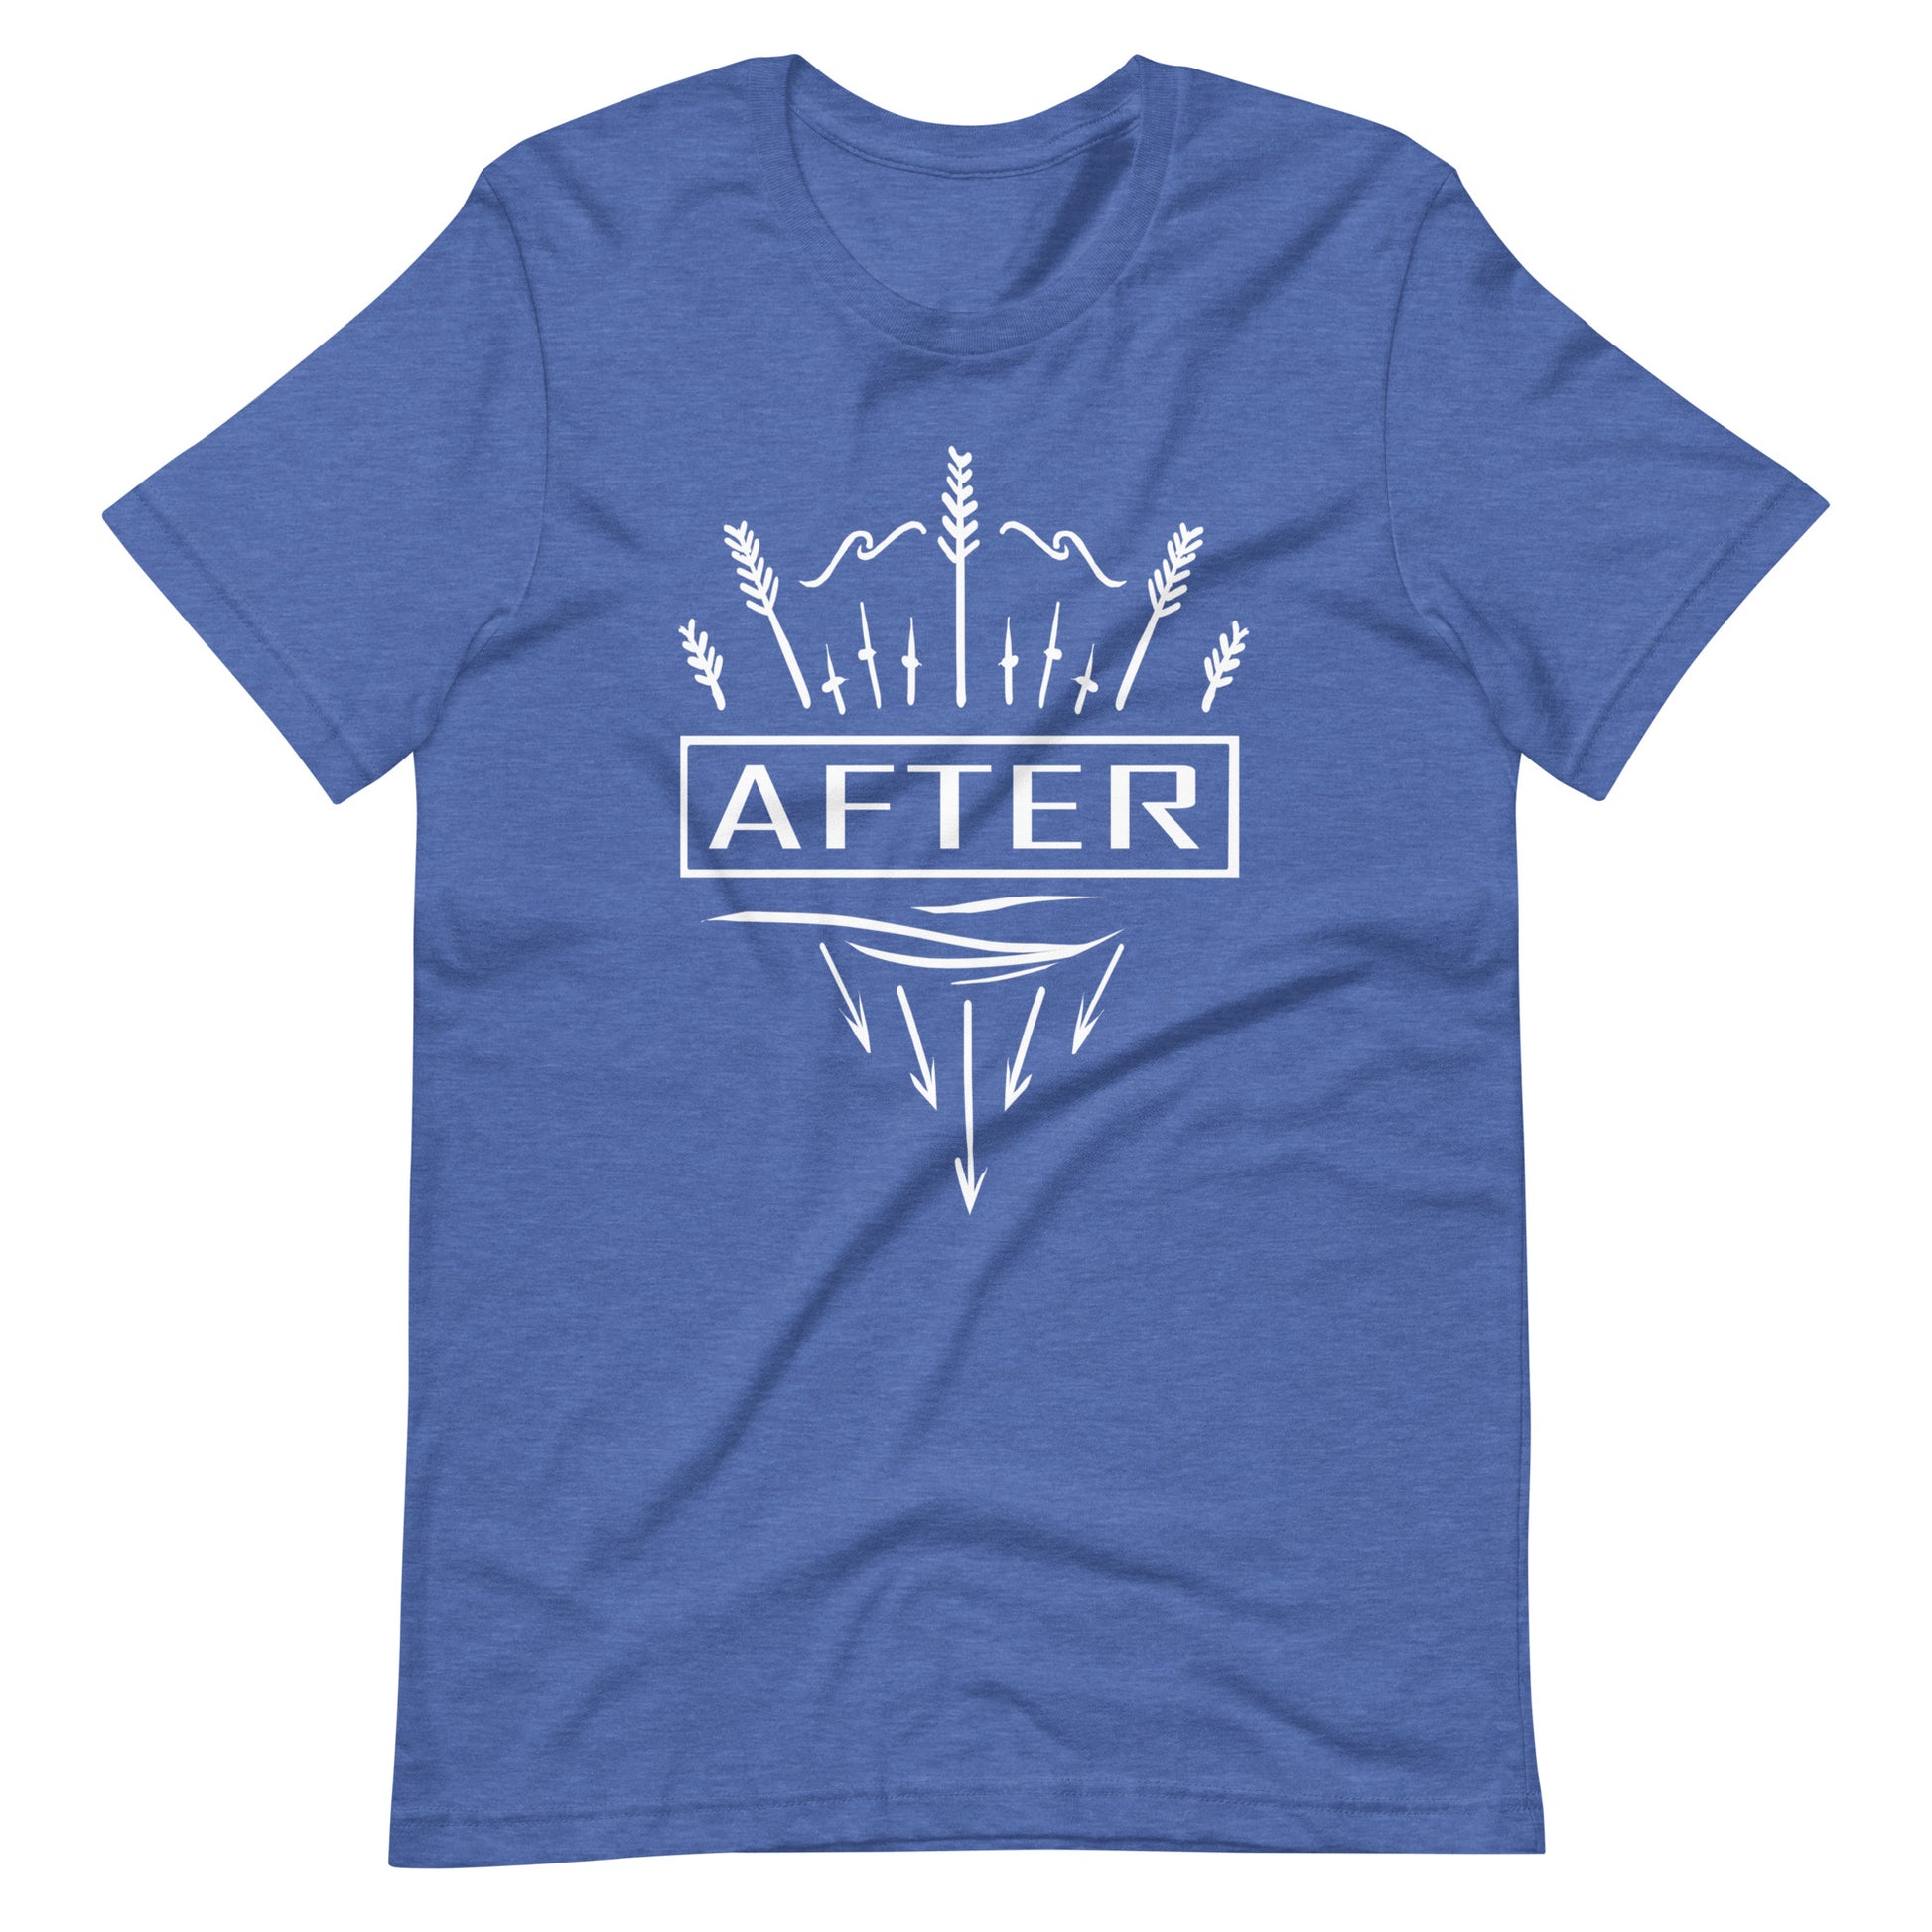 After - Men's t-shirt - Heather True Royal Front